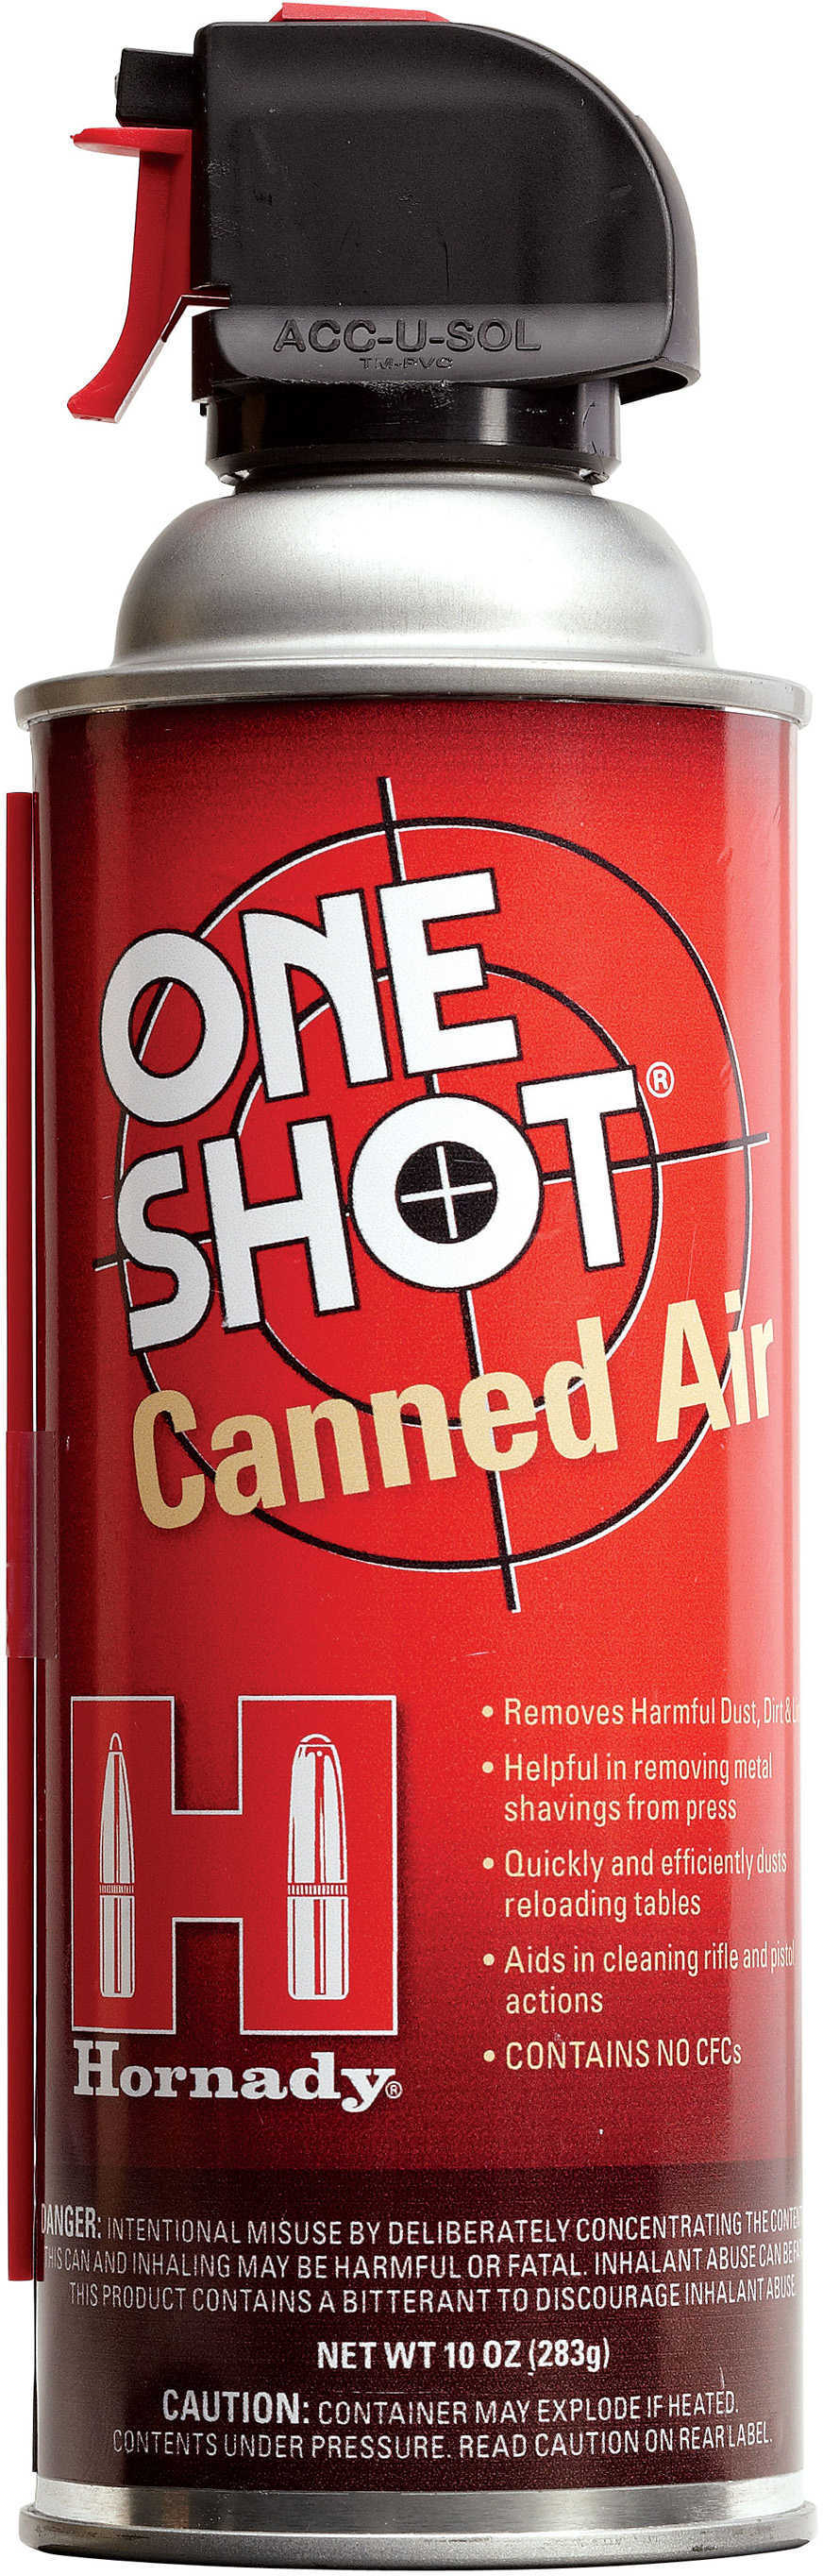 Hornady Canned Air One Shot 10Oz